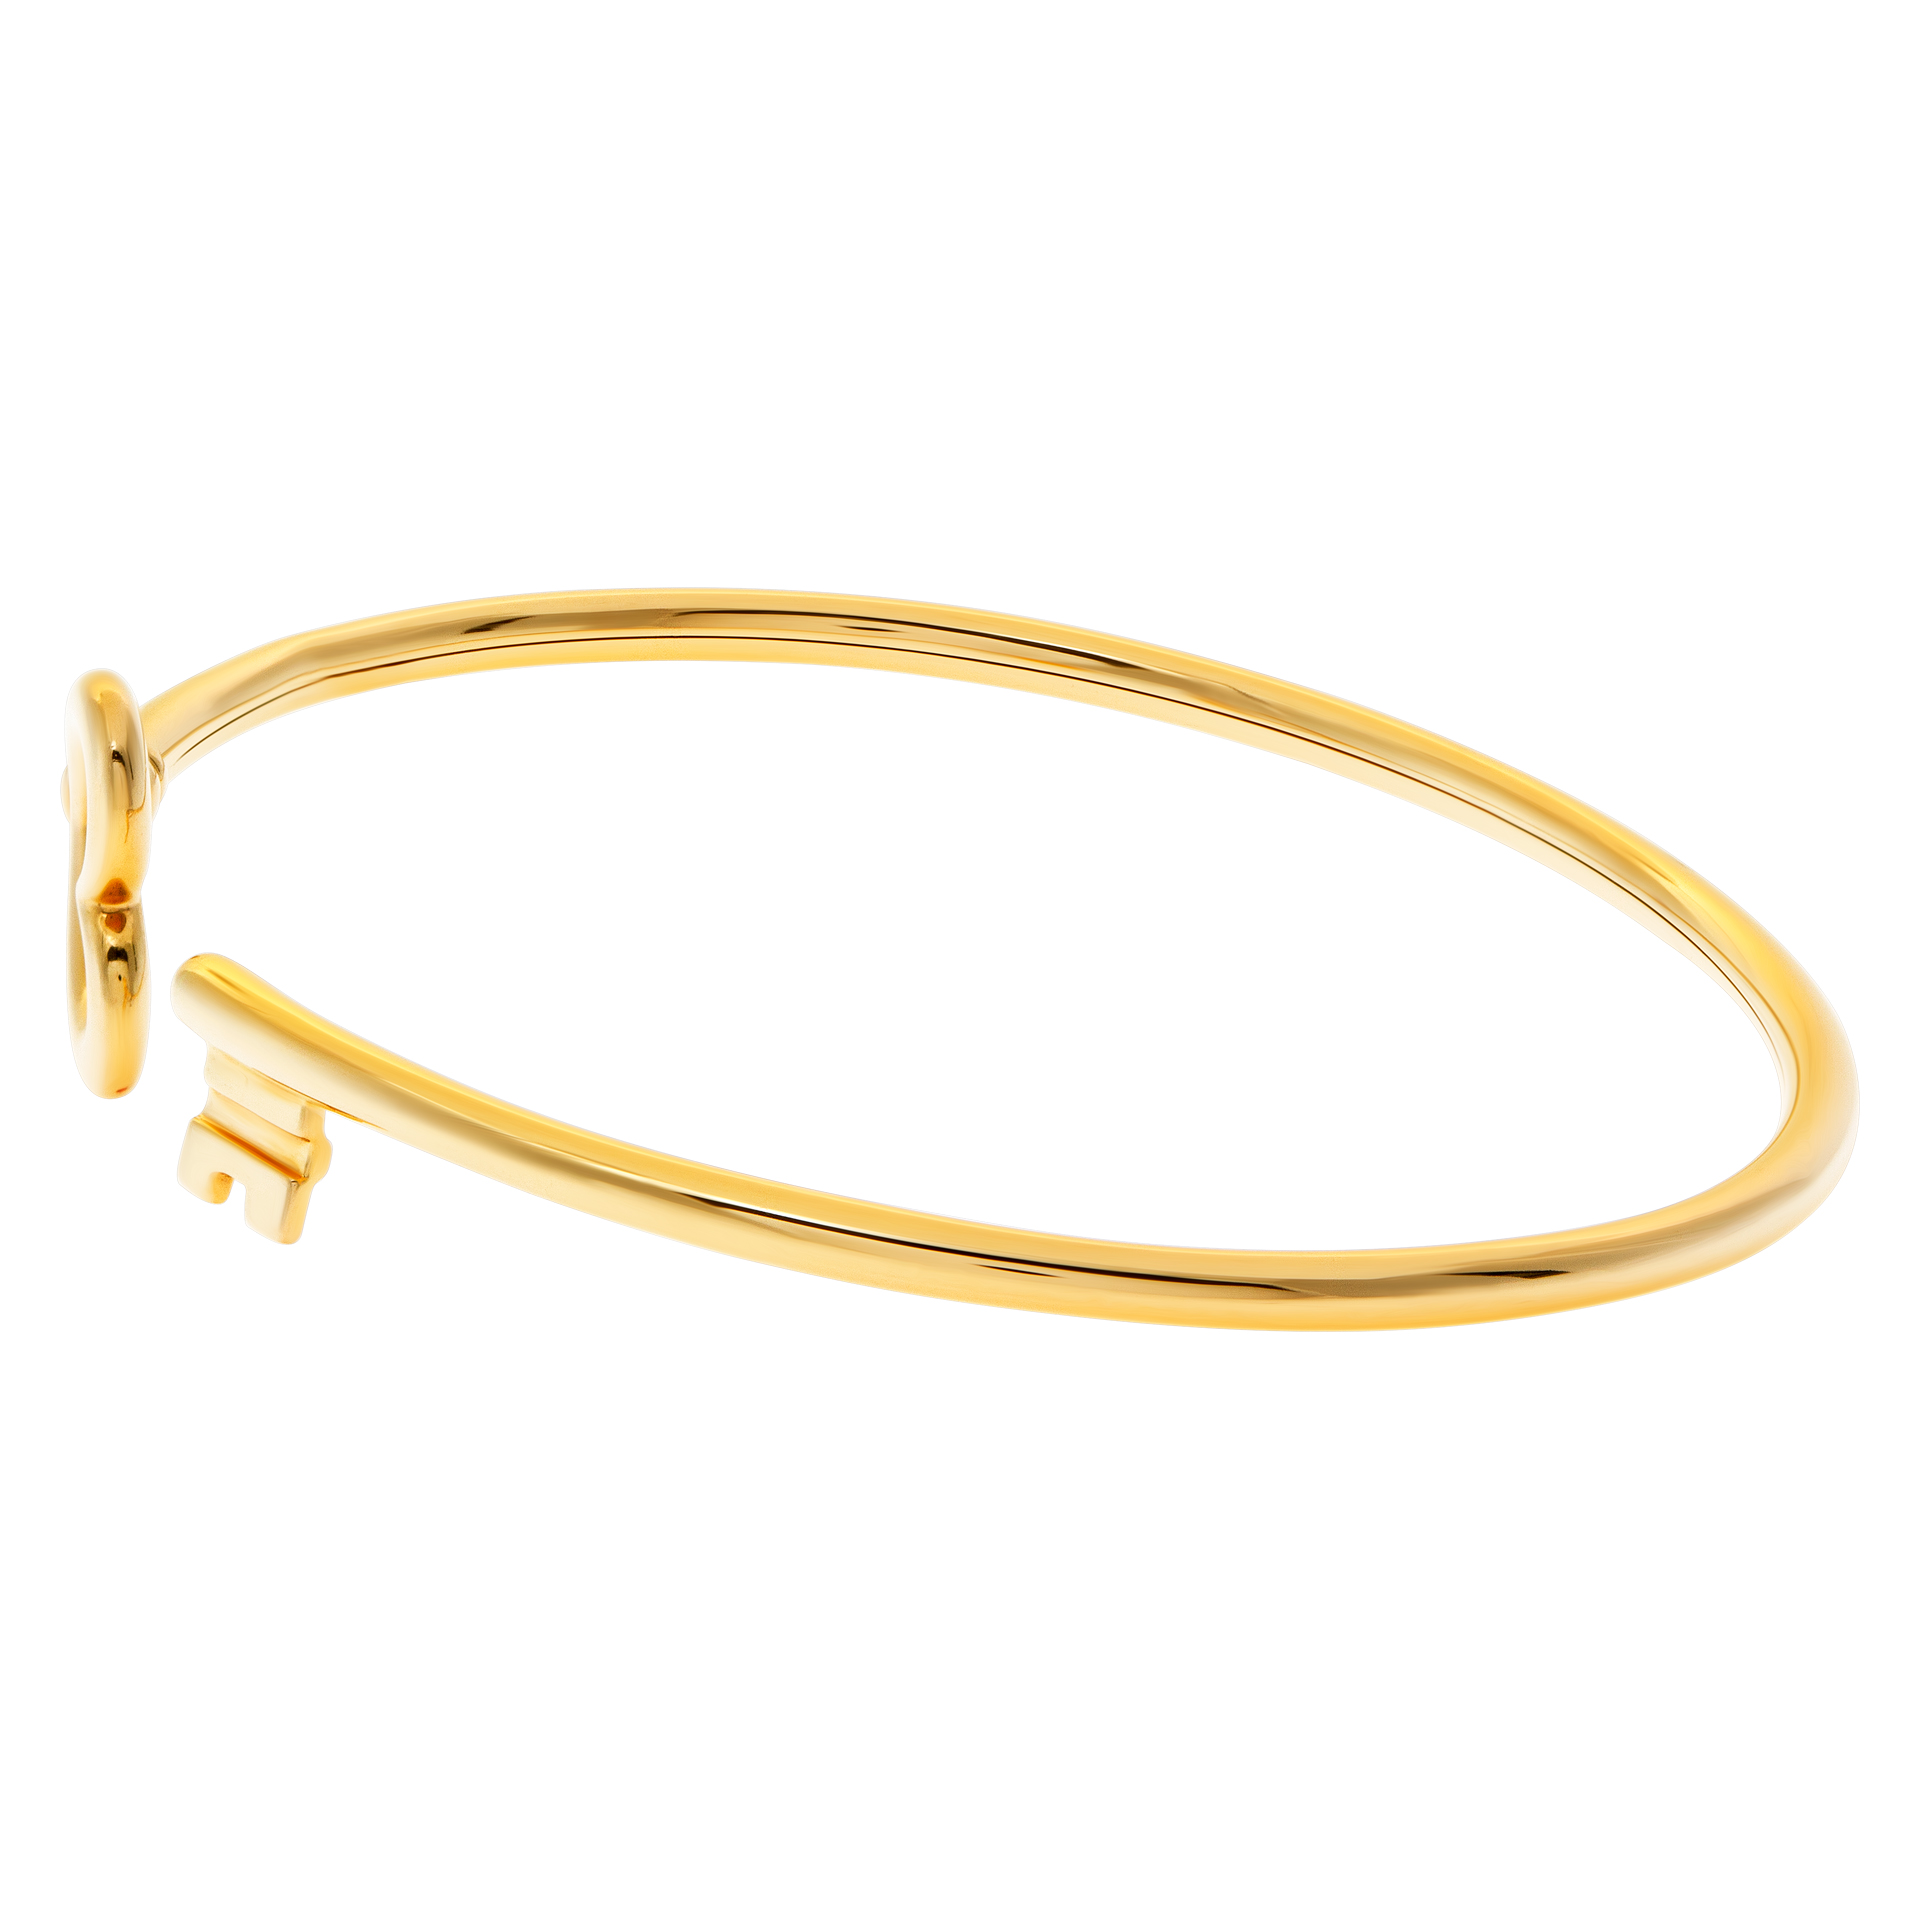 Tiffany & Co wire key bangle bracelet in 18k yellow gold image 4